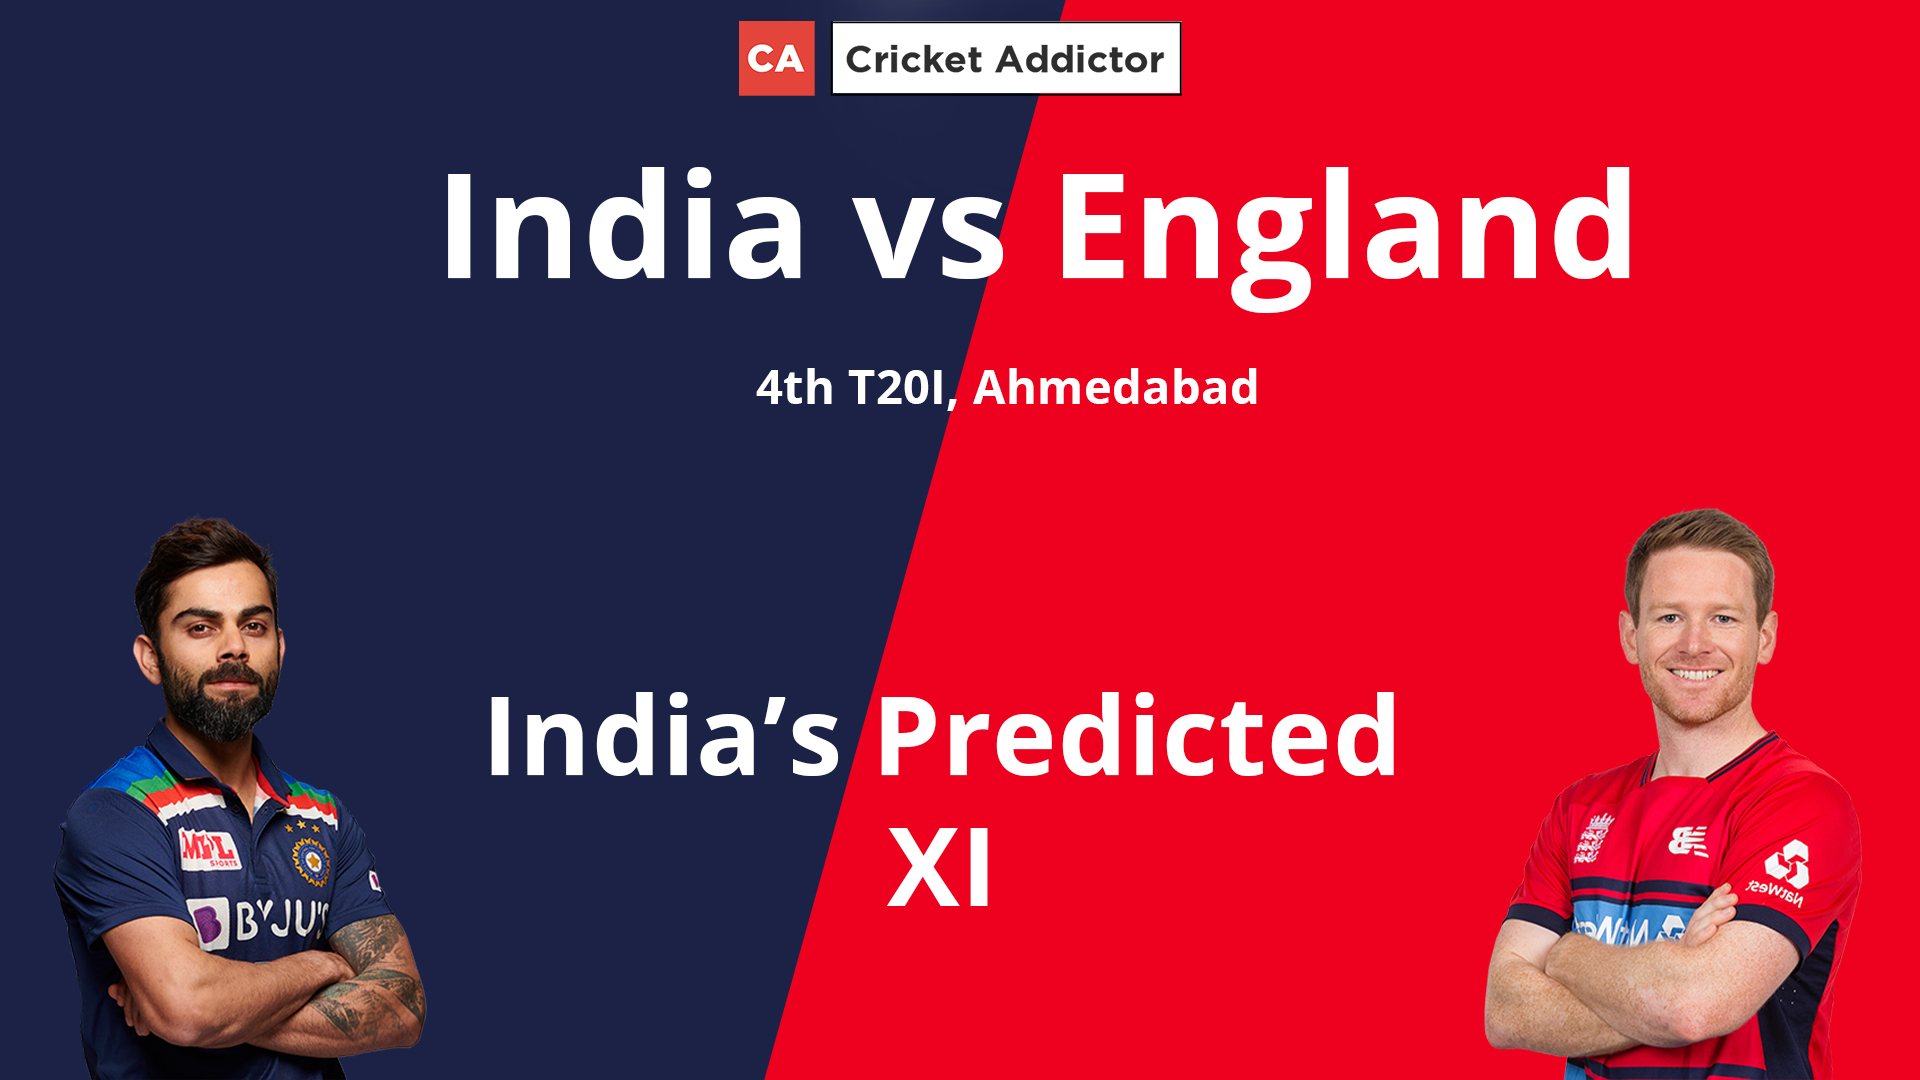 India vs England 2021, 4th T20I: India’s Predicted XI